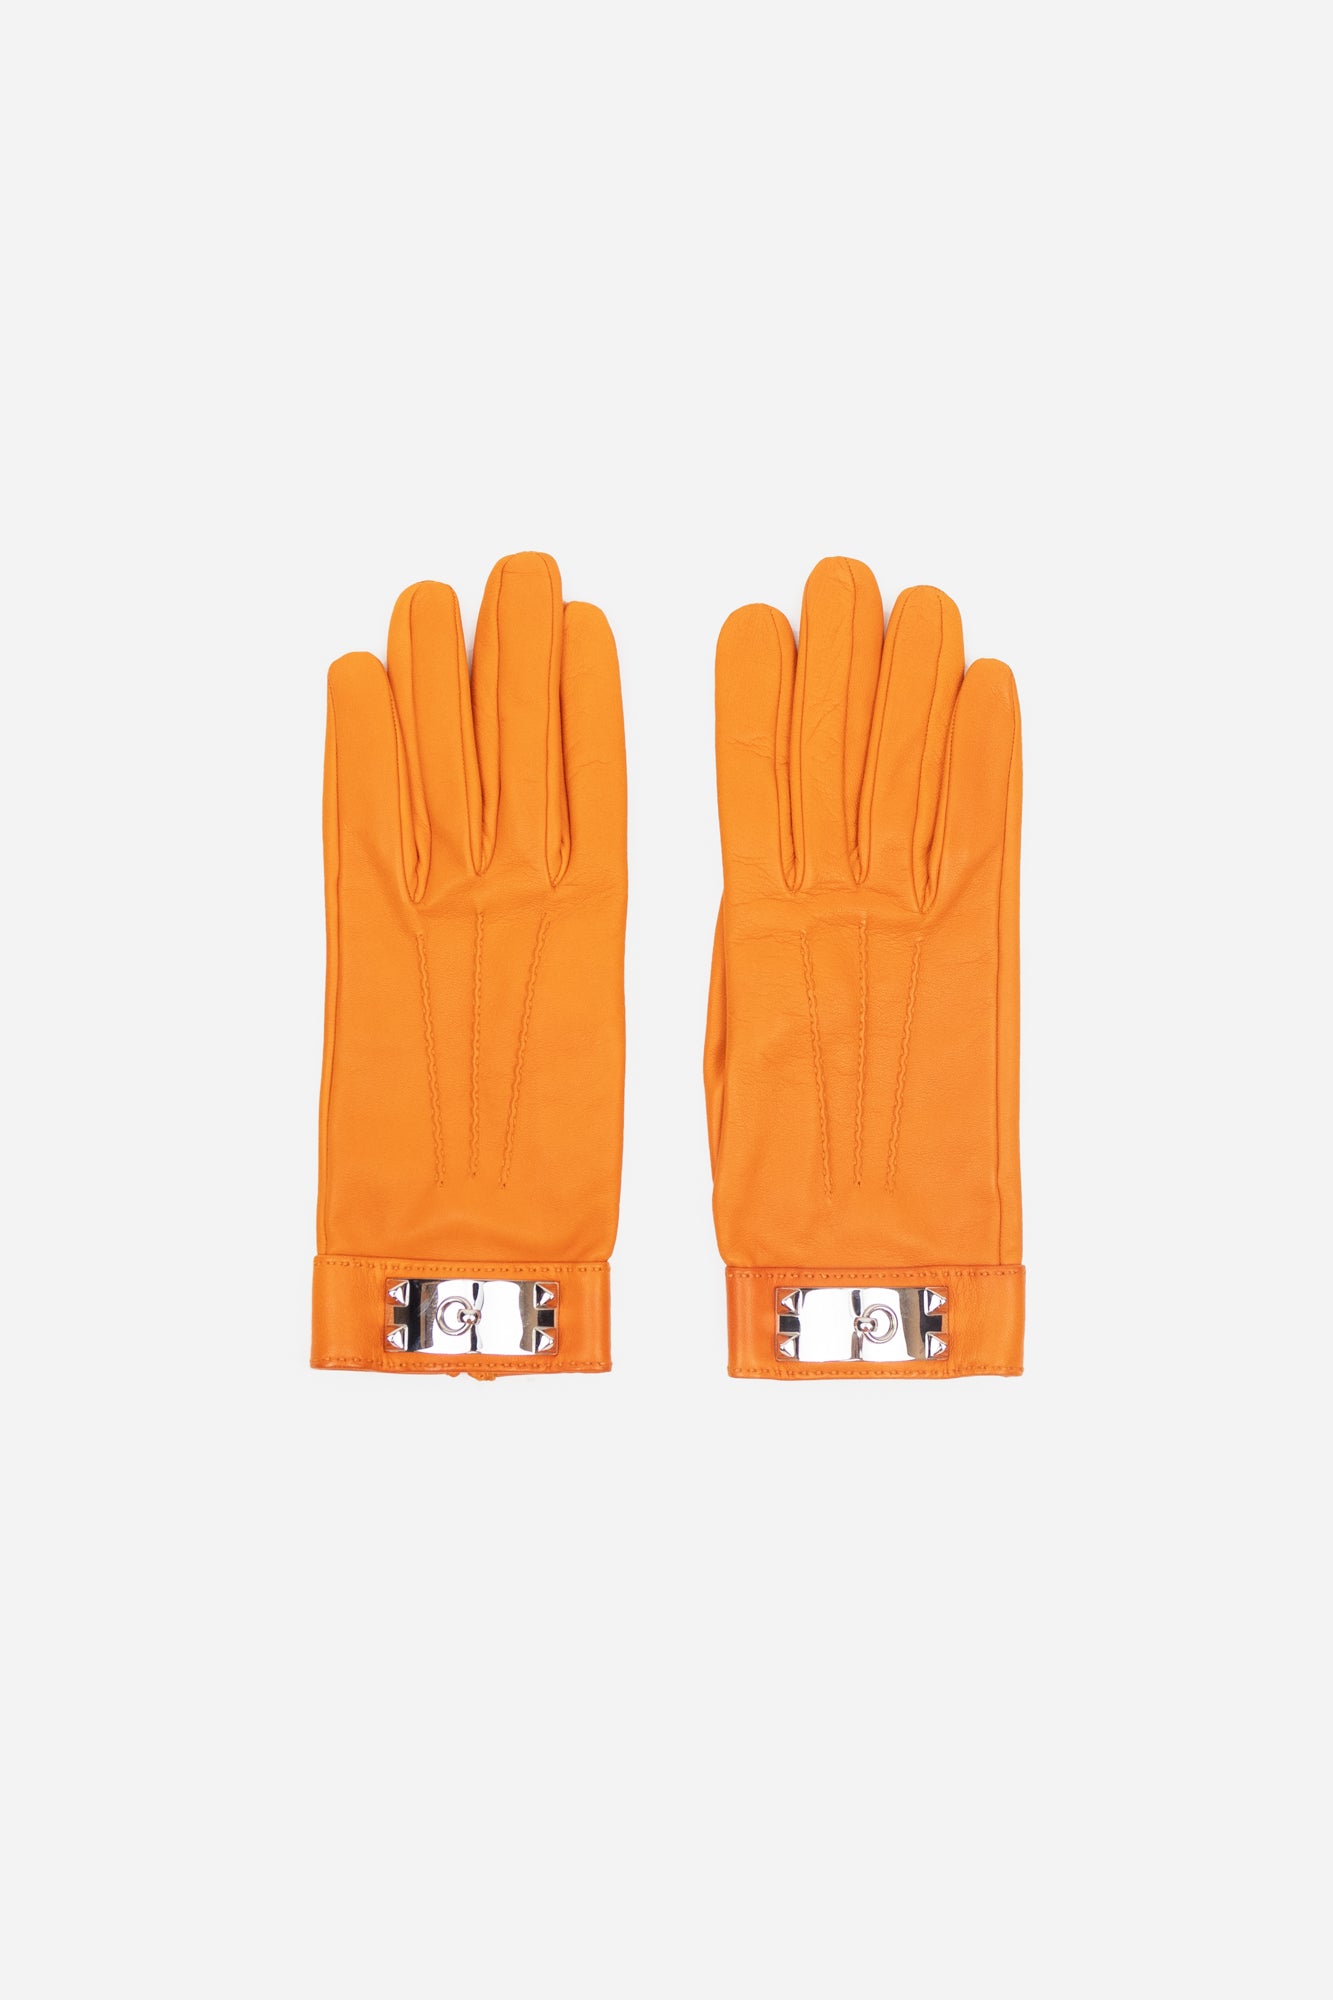 Collier Pour Chien Leather Gloves